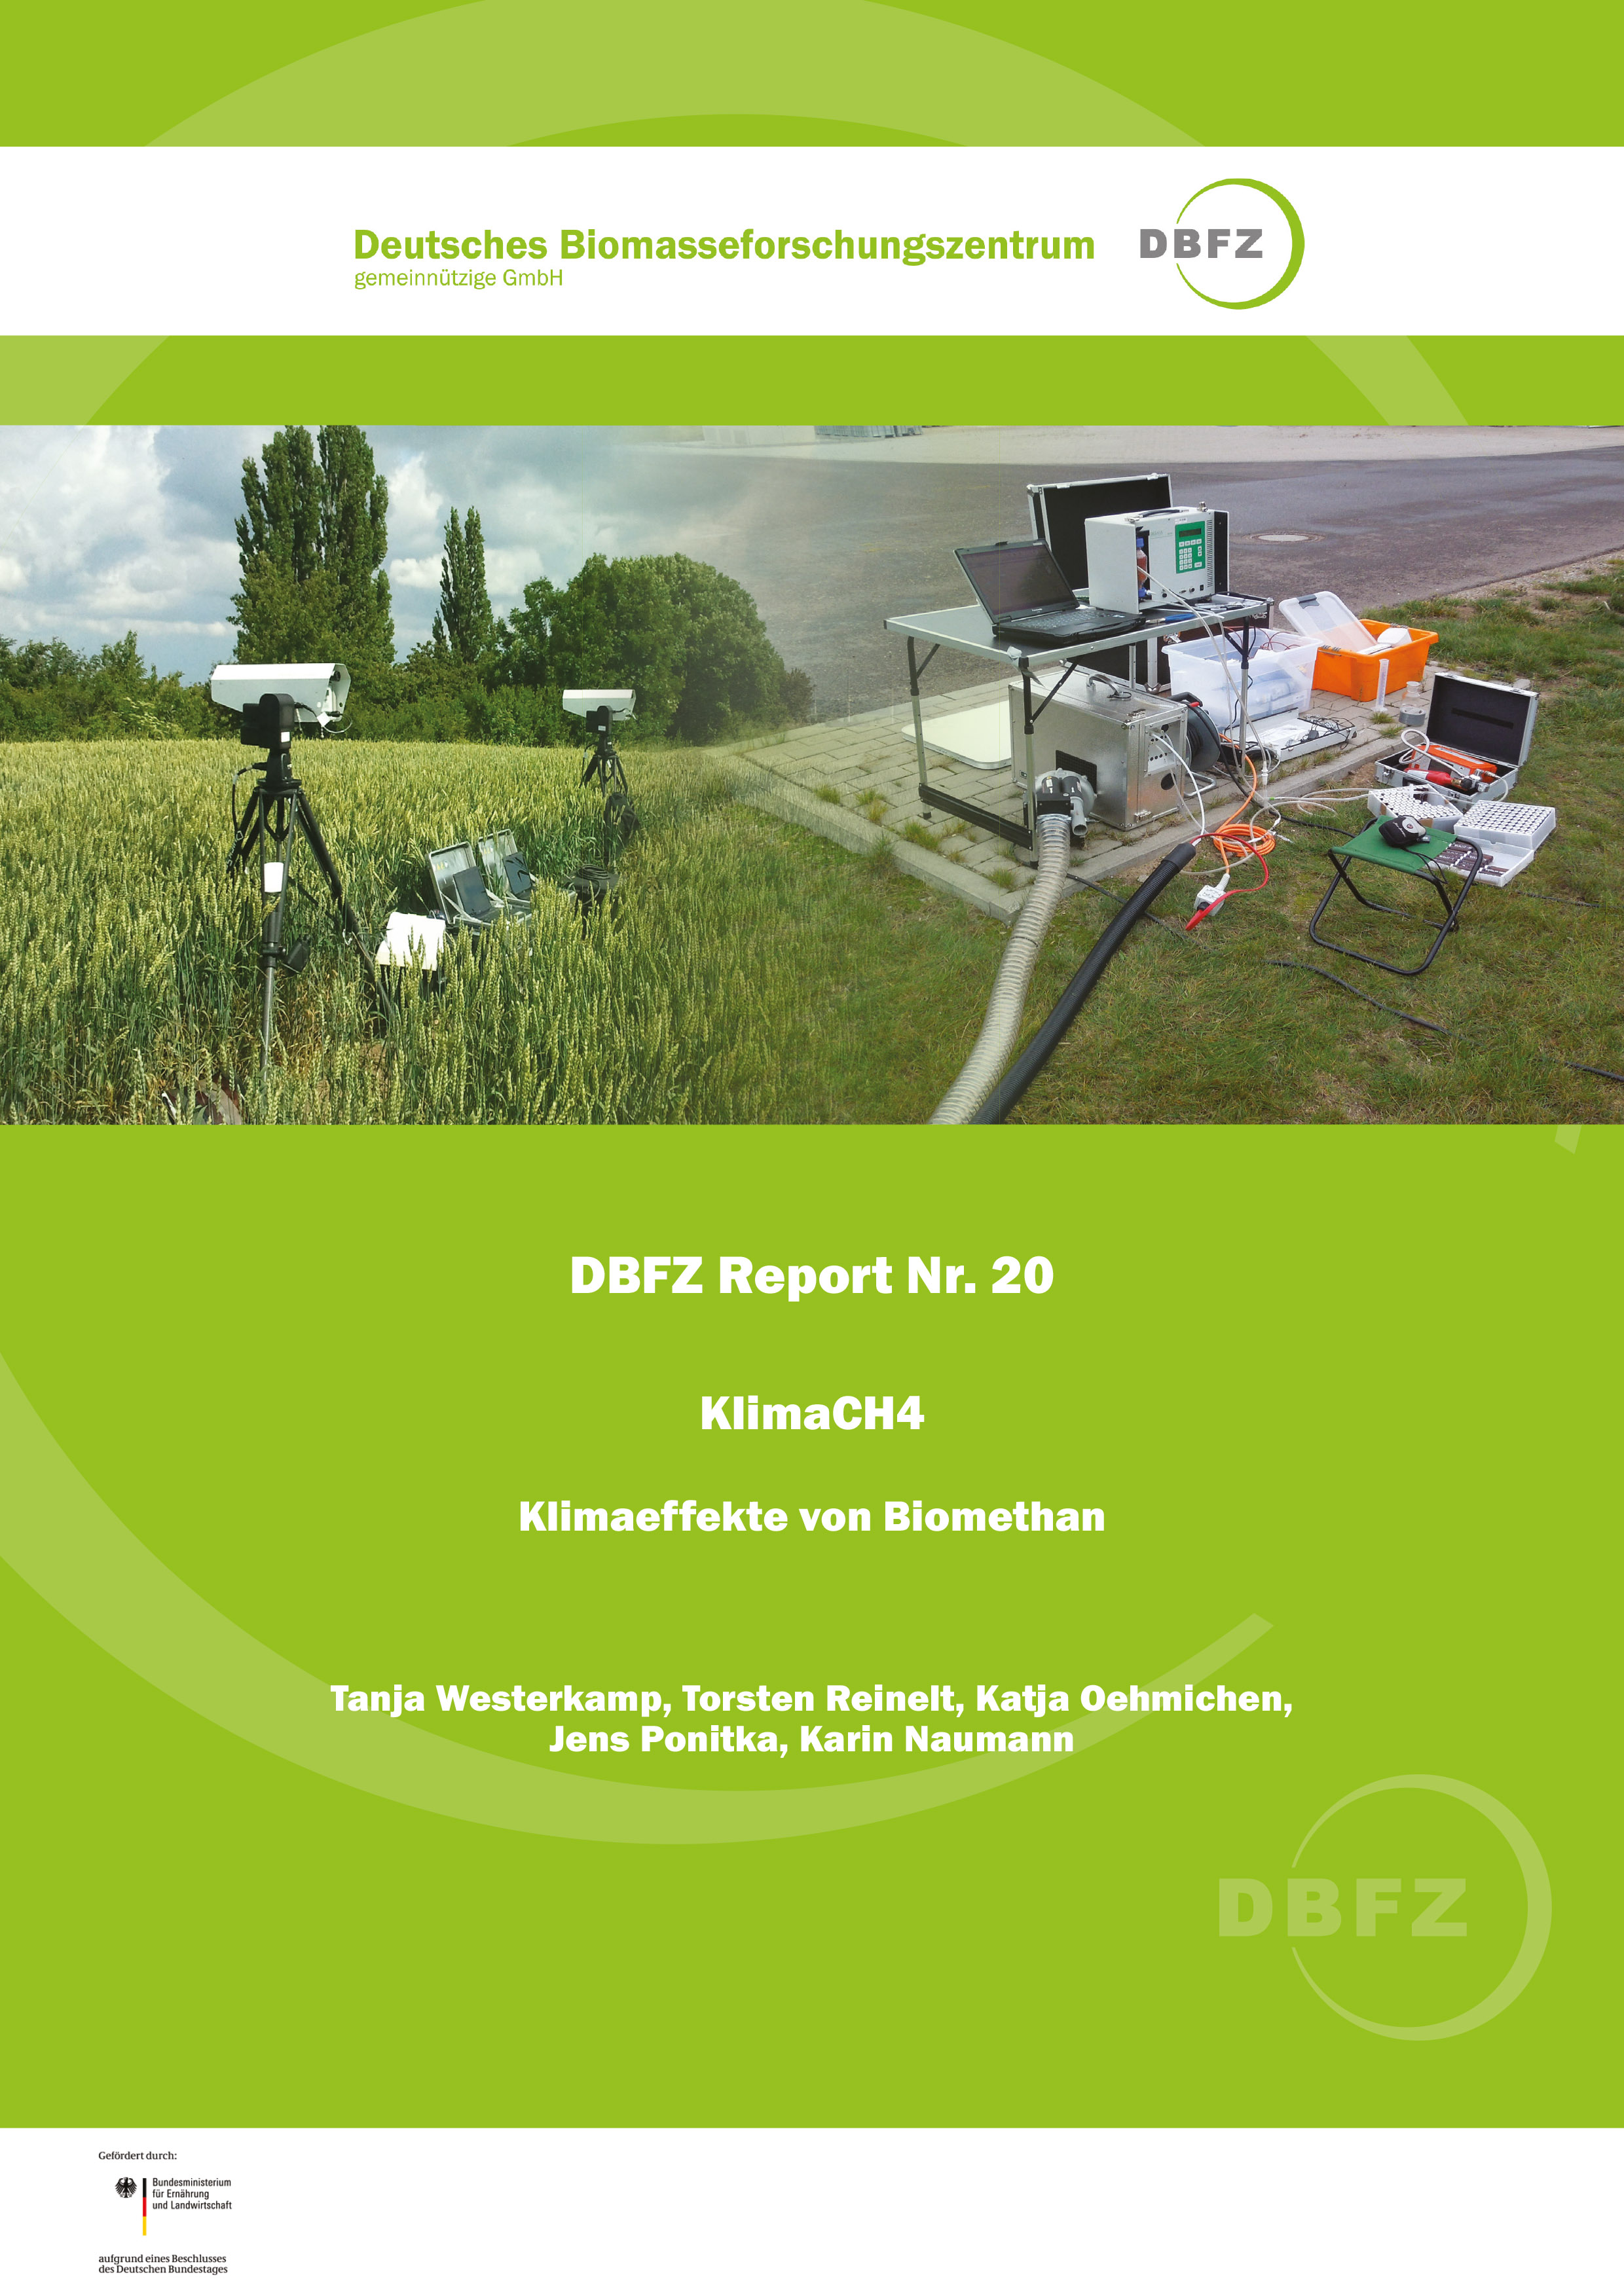 DBFZ Report No. 20